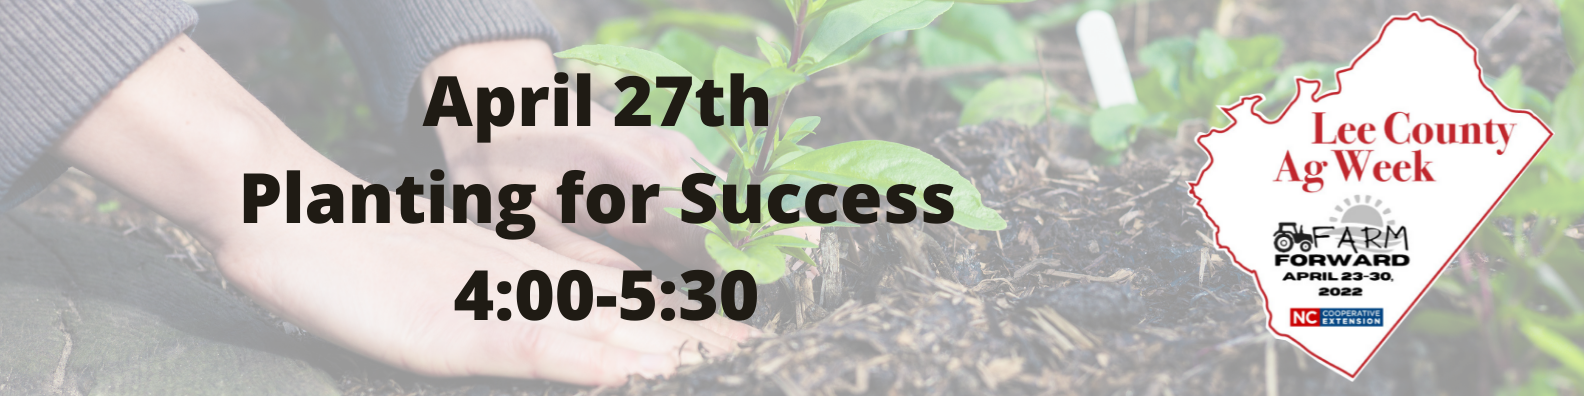 planting for success april 27